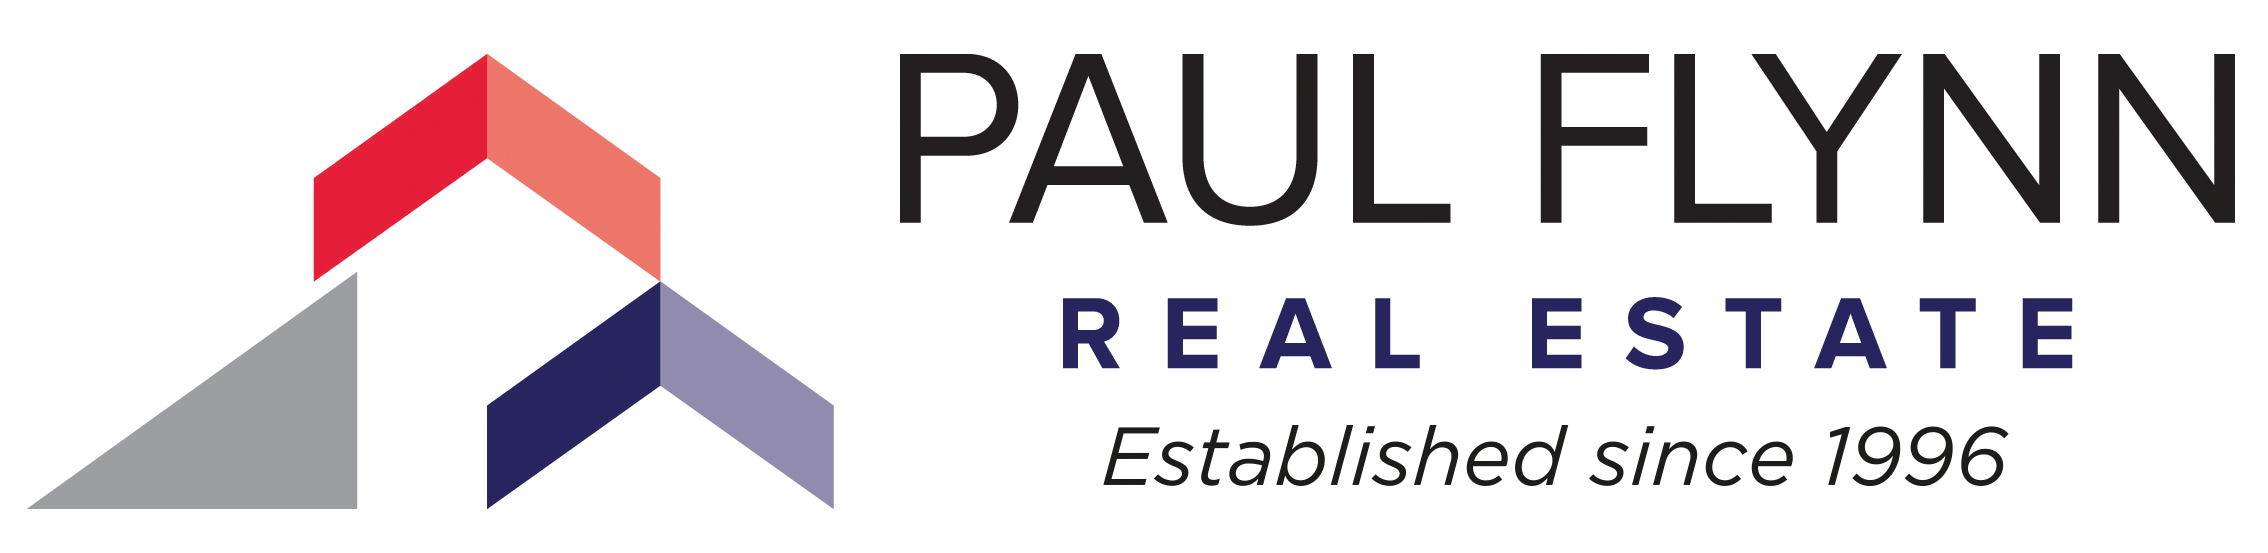 Paul Flynn Real Estate - South East Queensland